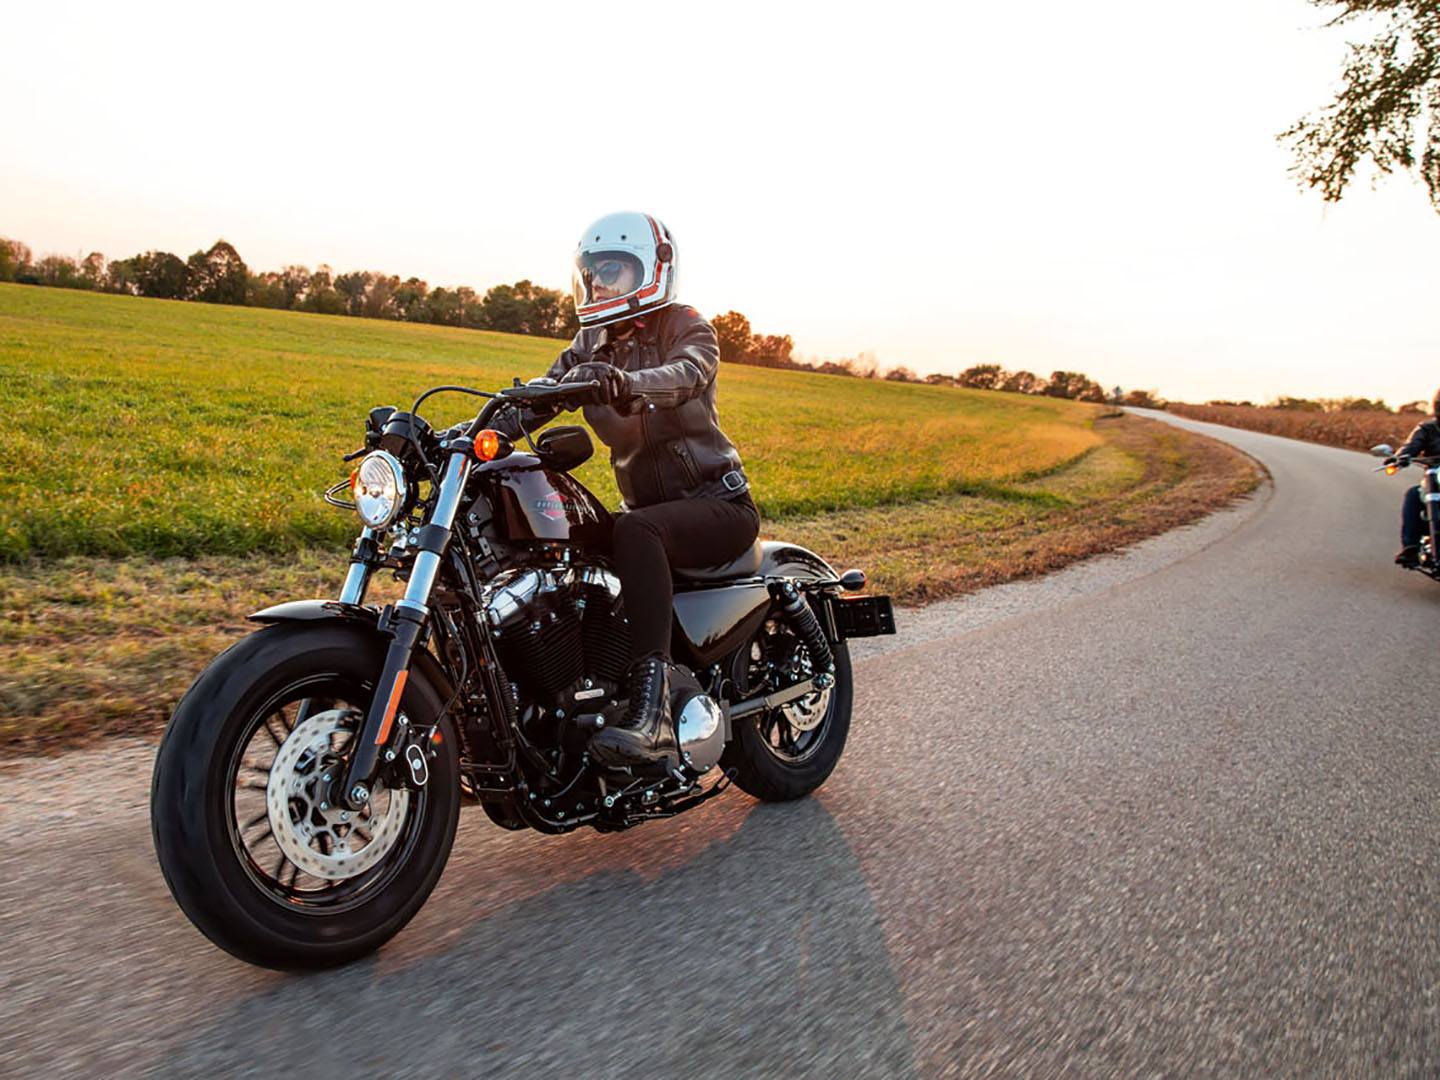 2021 Harley-Davidson Forty-Eight® in Omaha, Nebraska - Photo 16